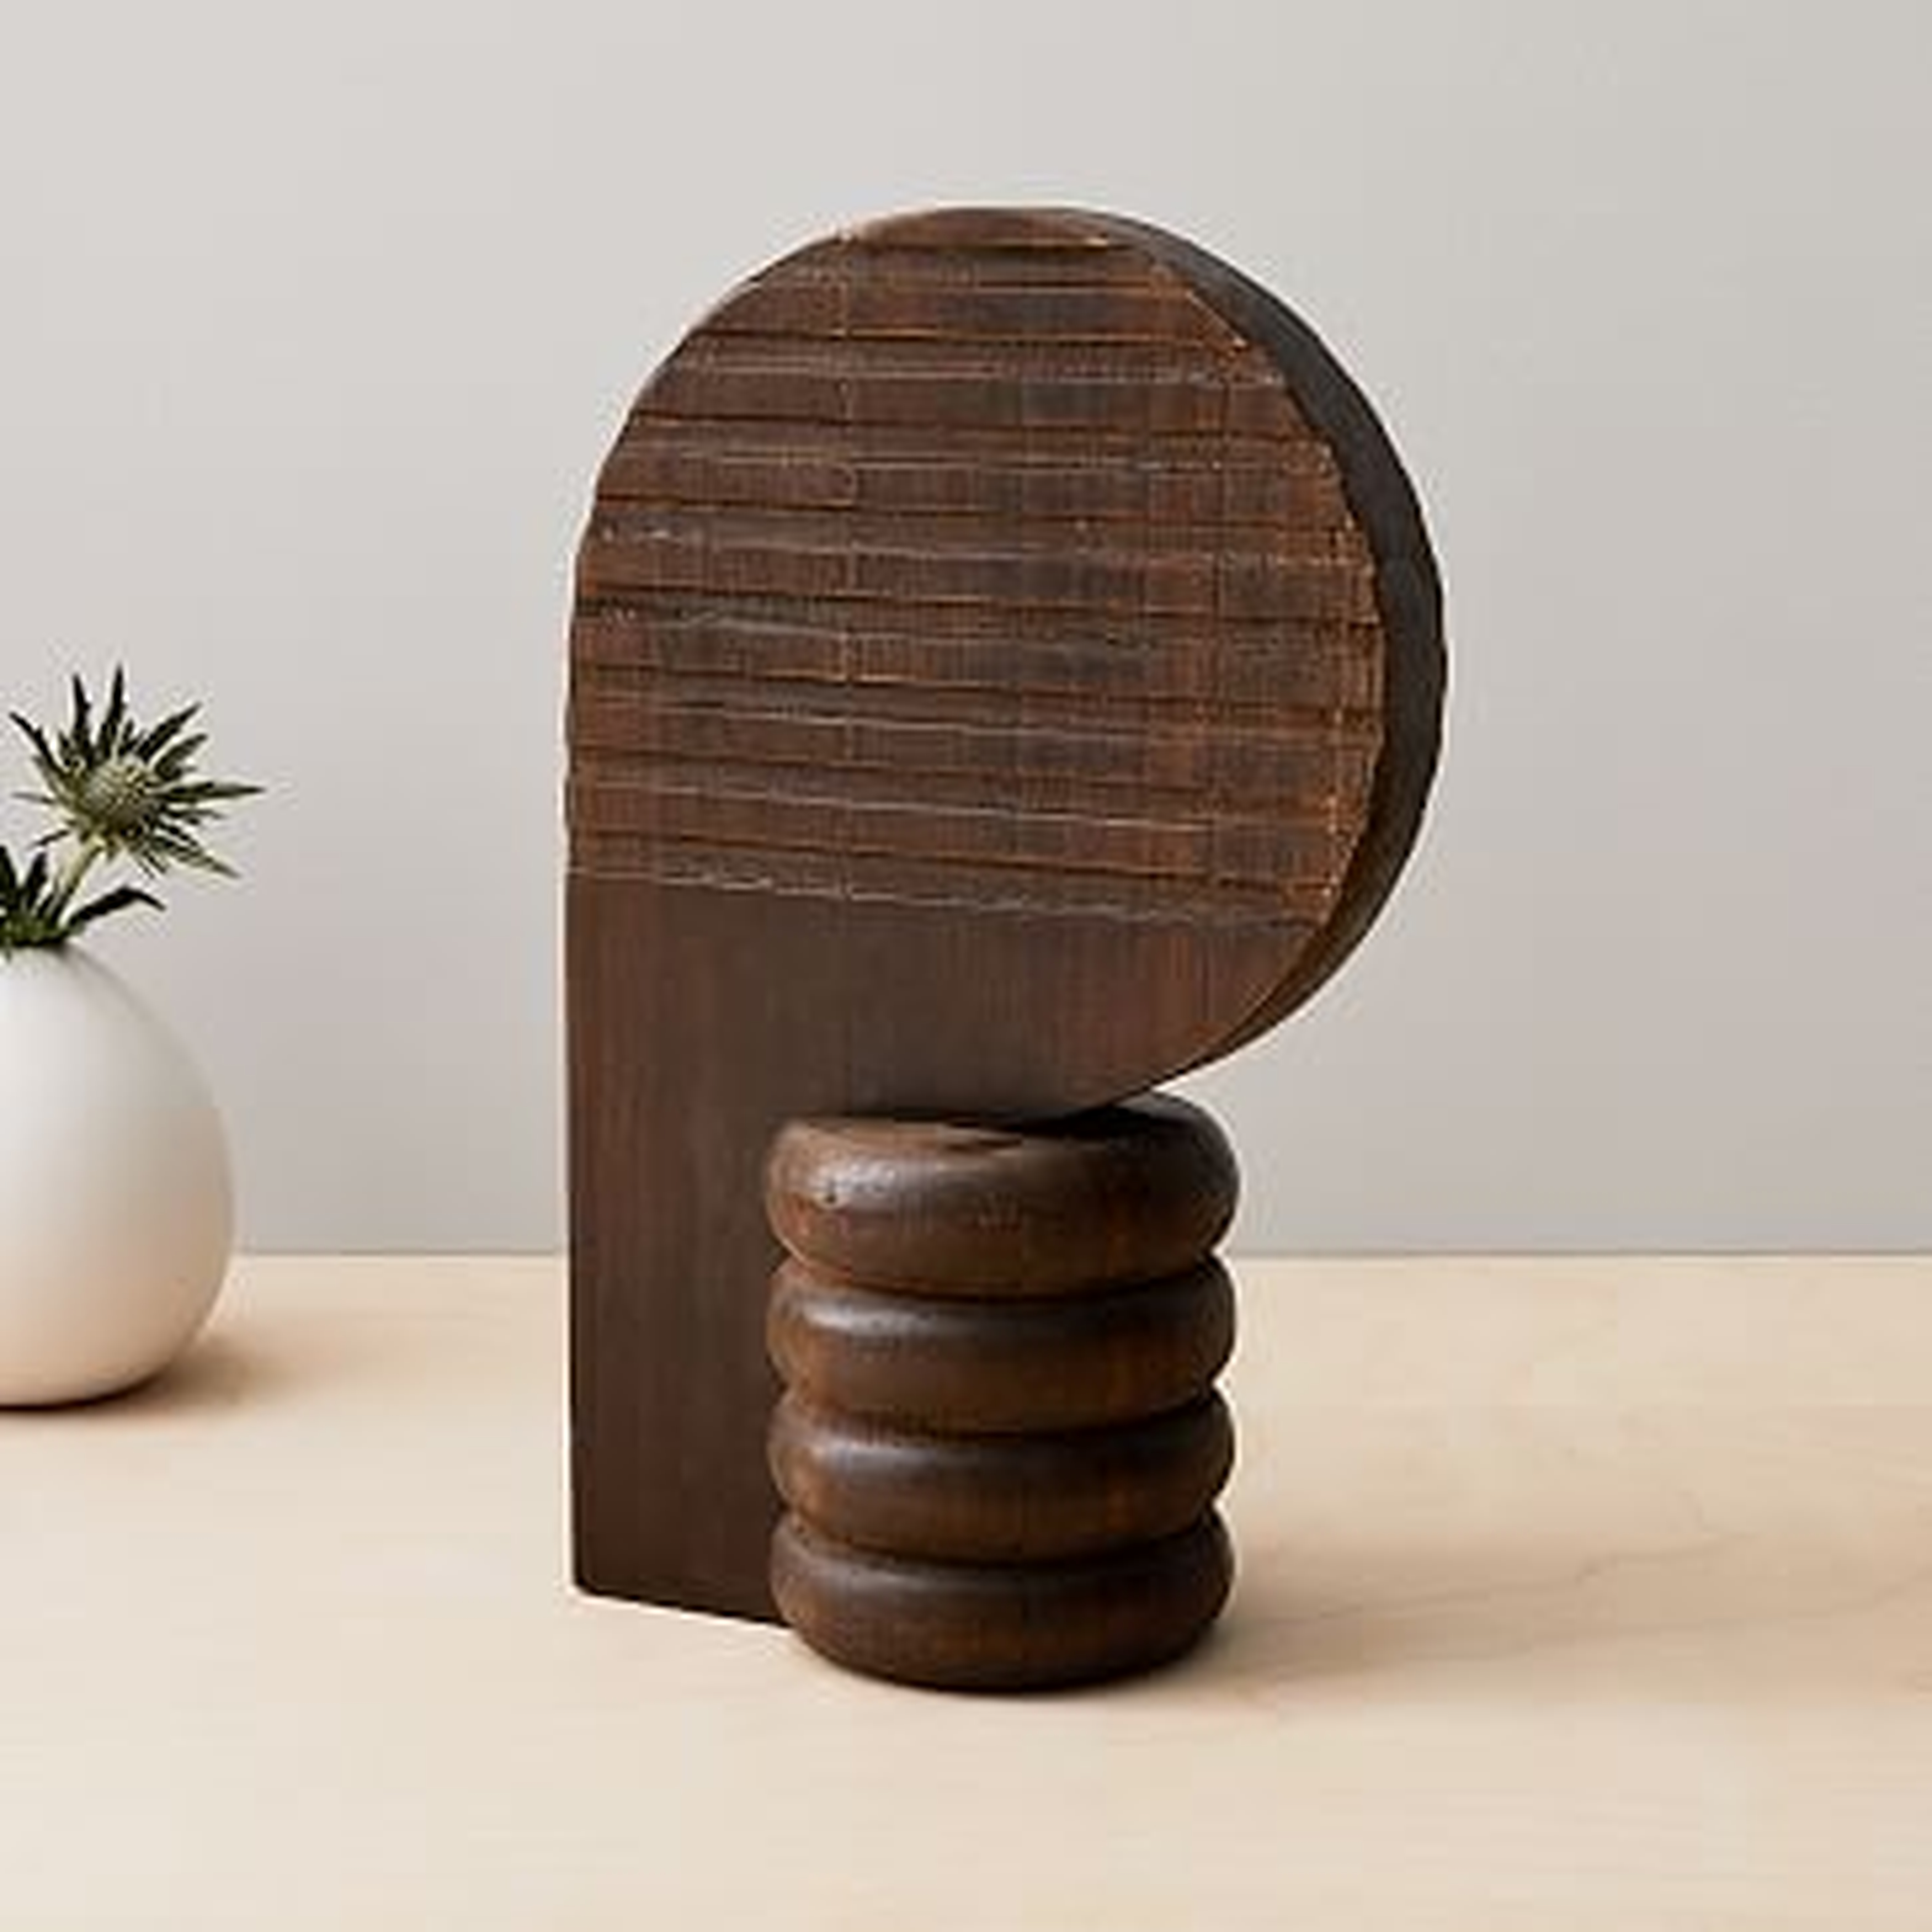 Diego Olivero Wood Decorative Object, Silhouette - West Elm